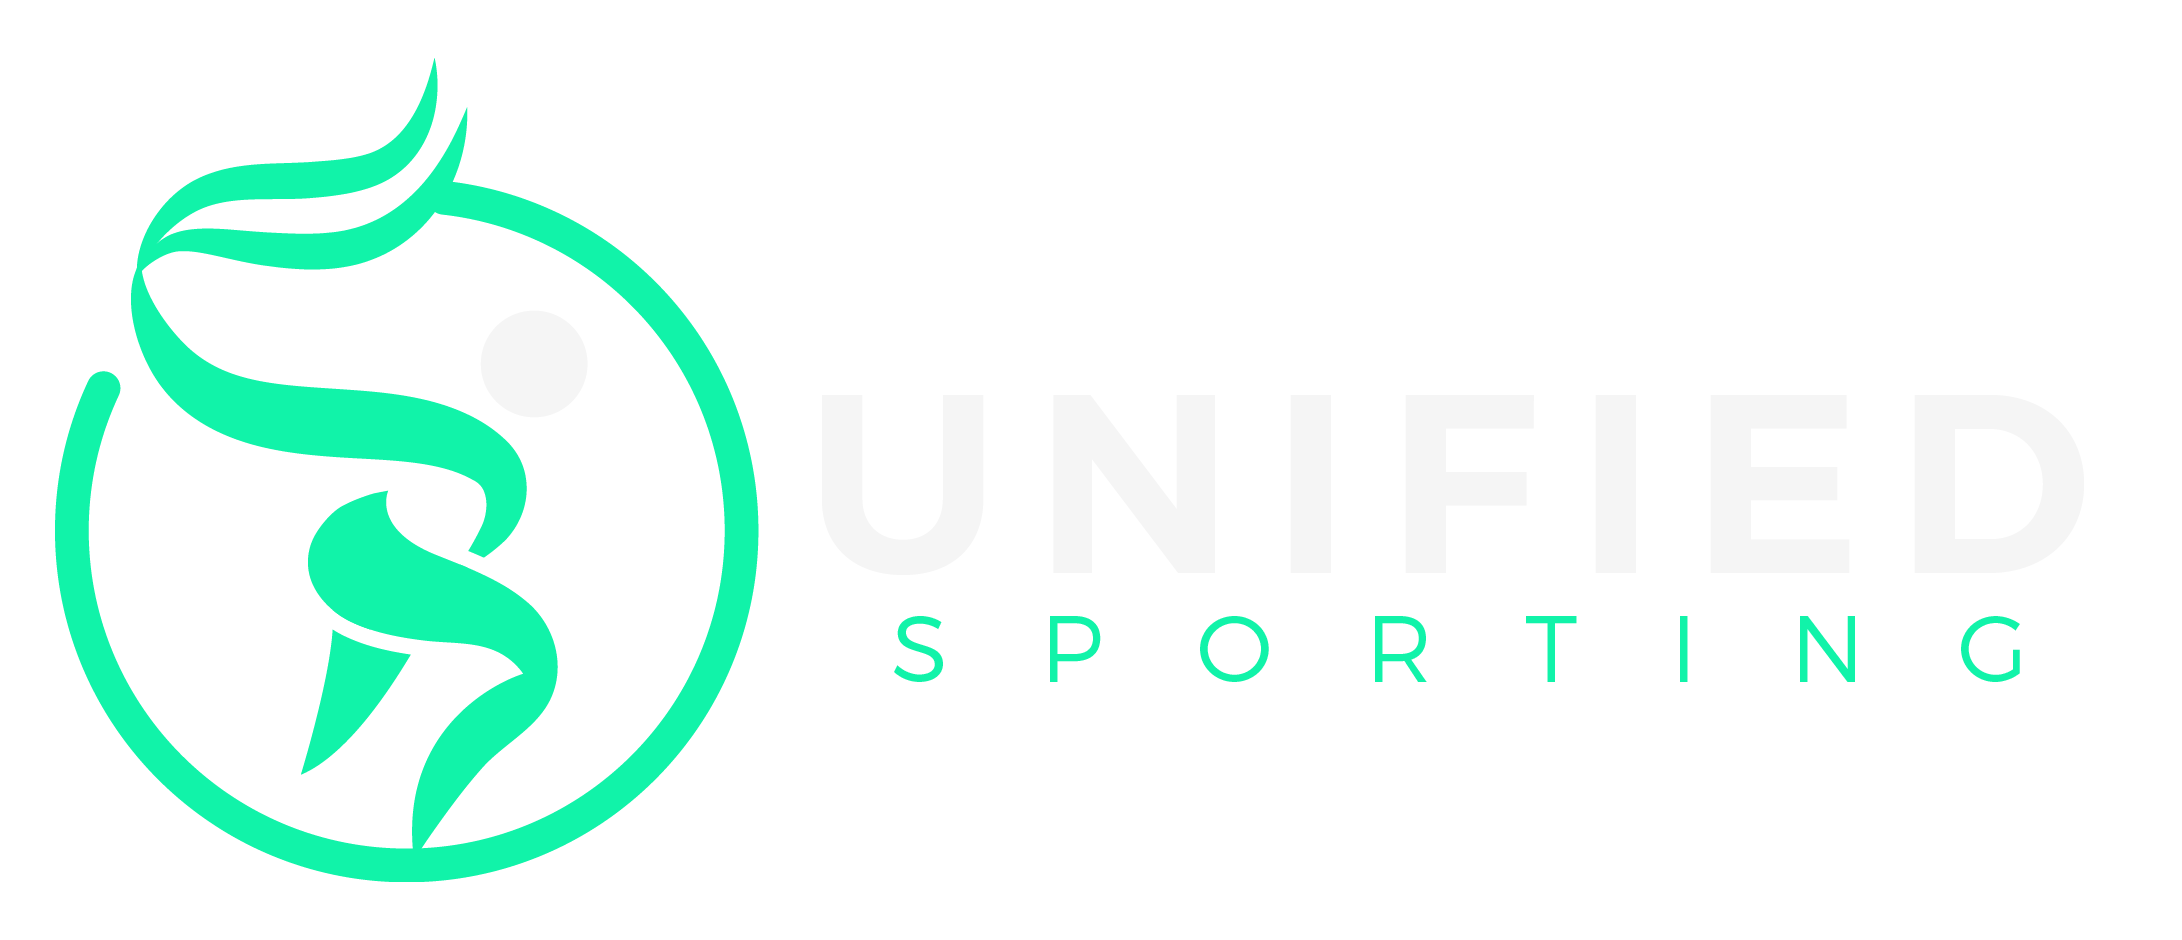 Unifiedsporting